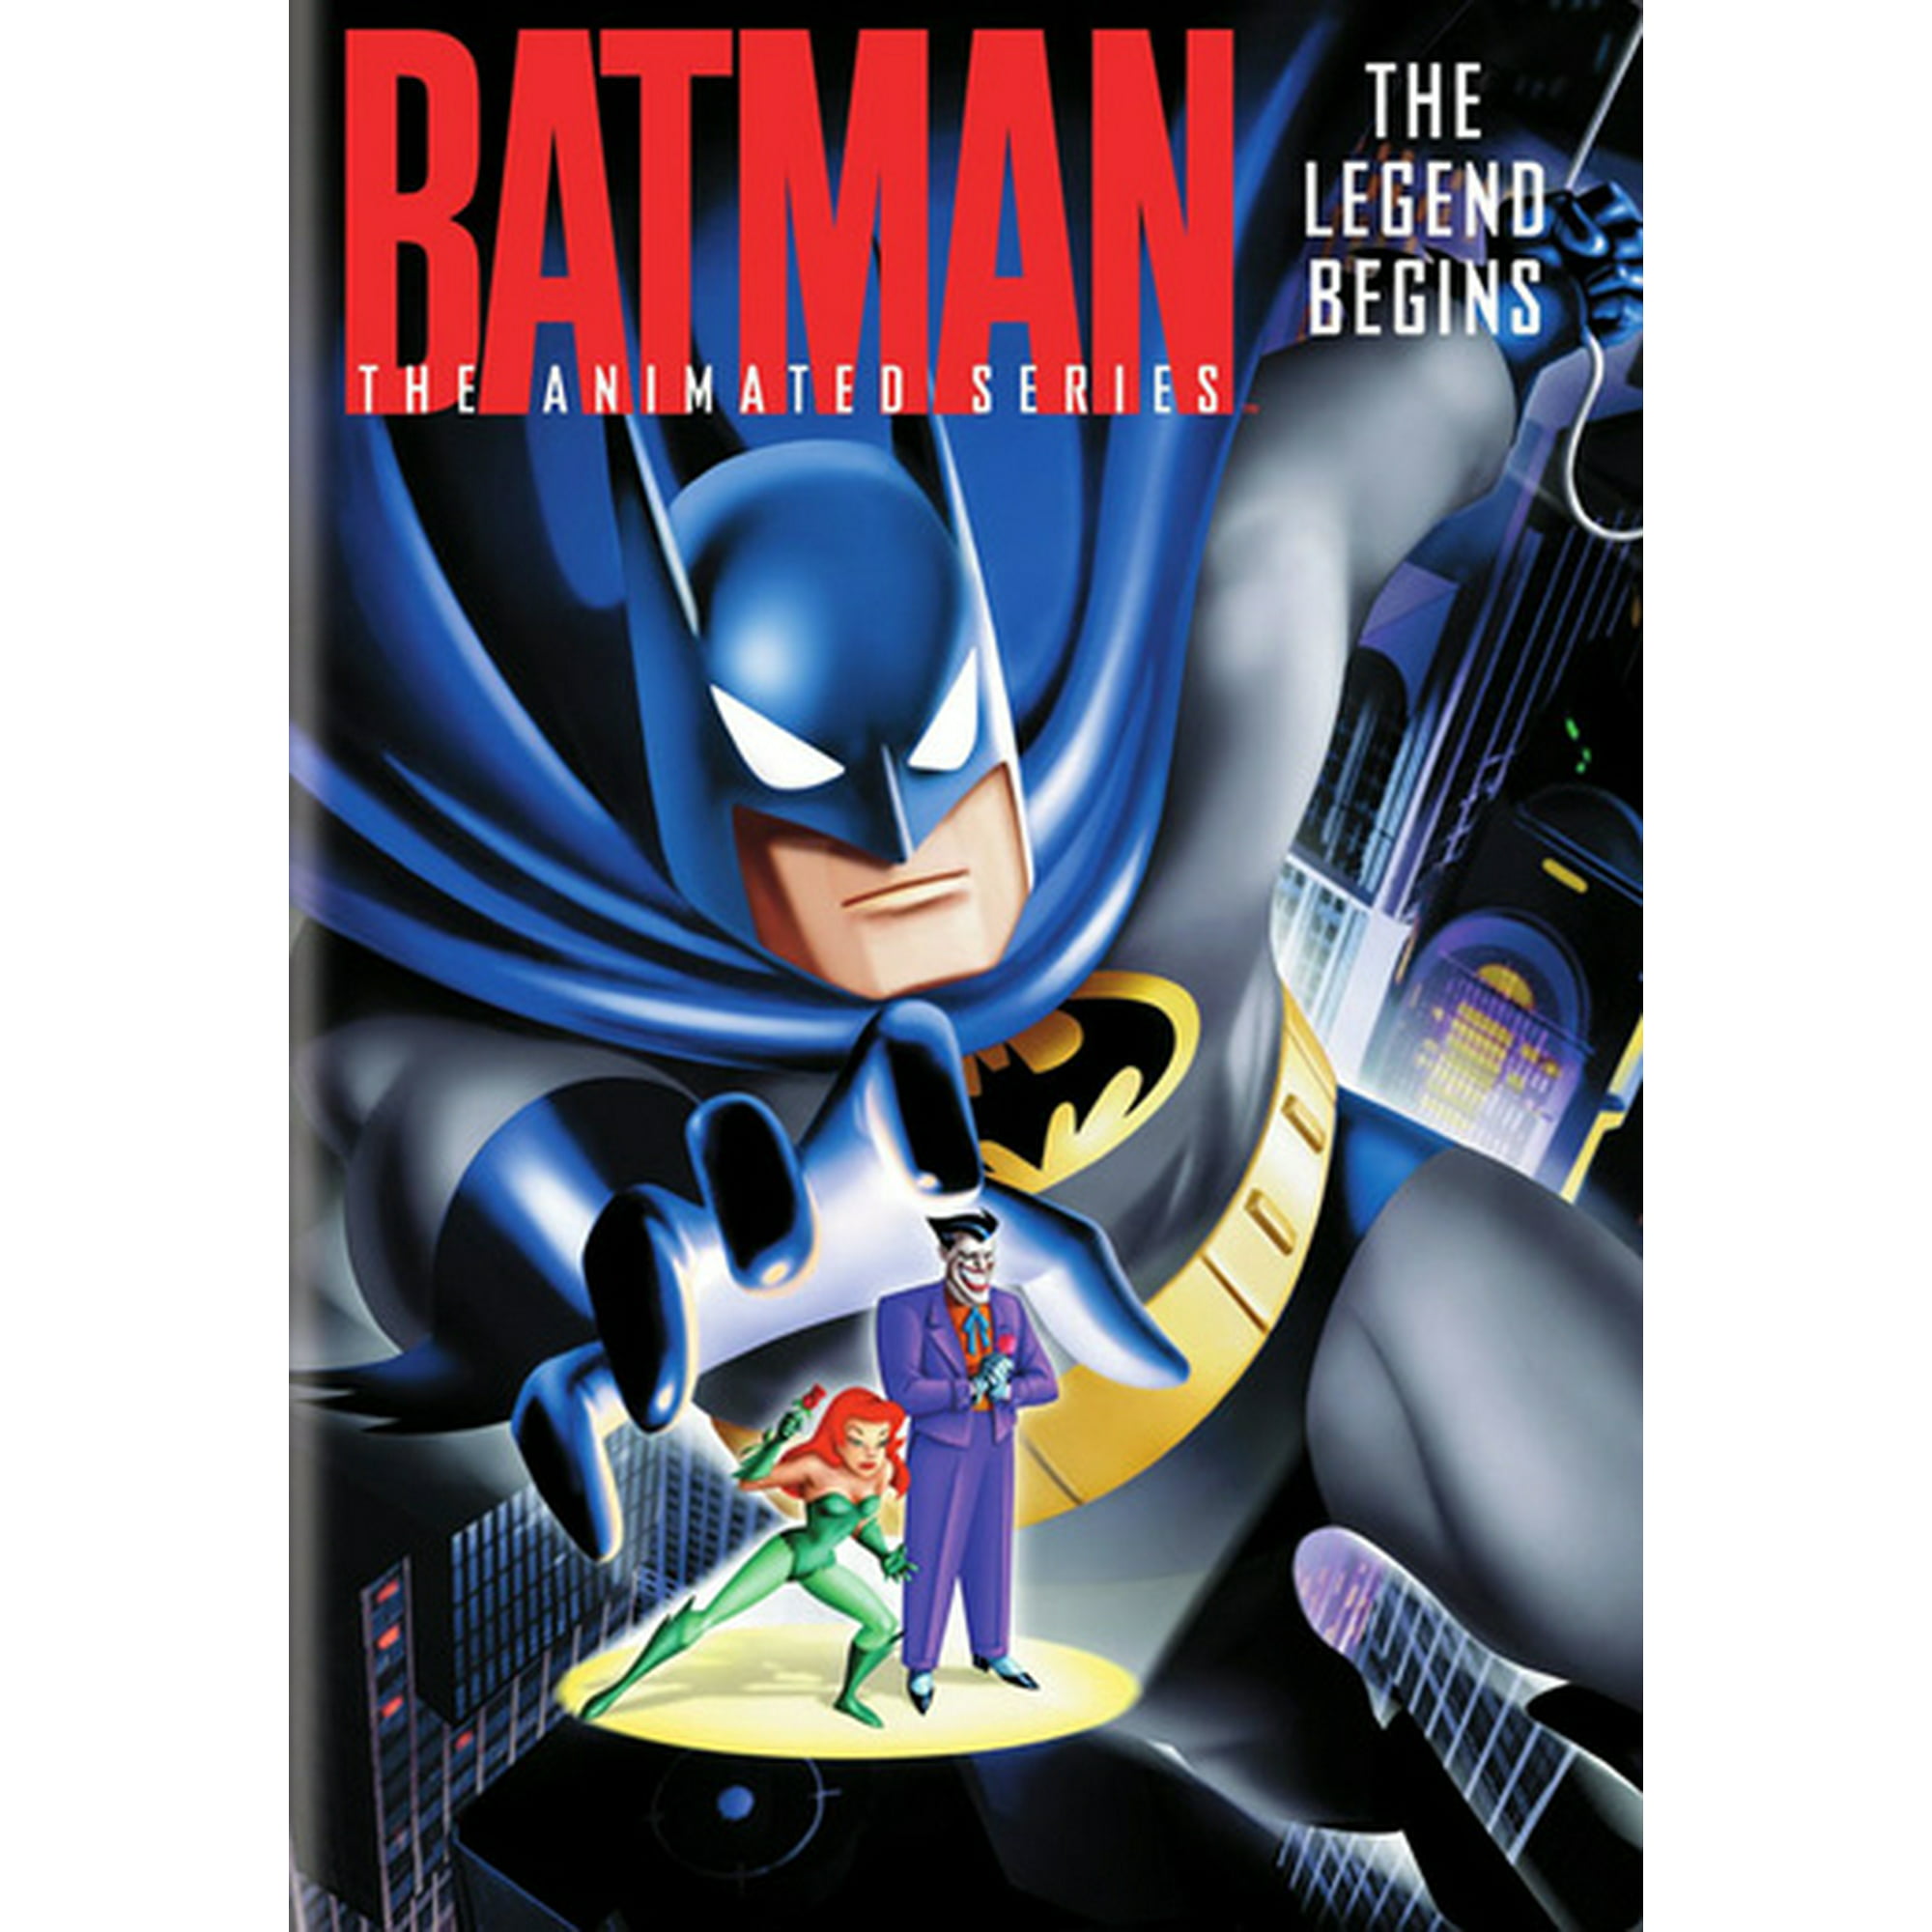 STUDIO DISTRIBUTION SERVI BATMAN-ANIMATED SERIES-LEGEND BEGINS (DVD/ECO)  D110543D | Walmart Canada